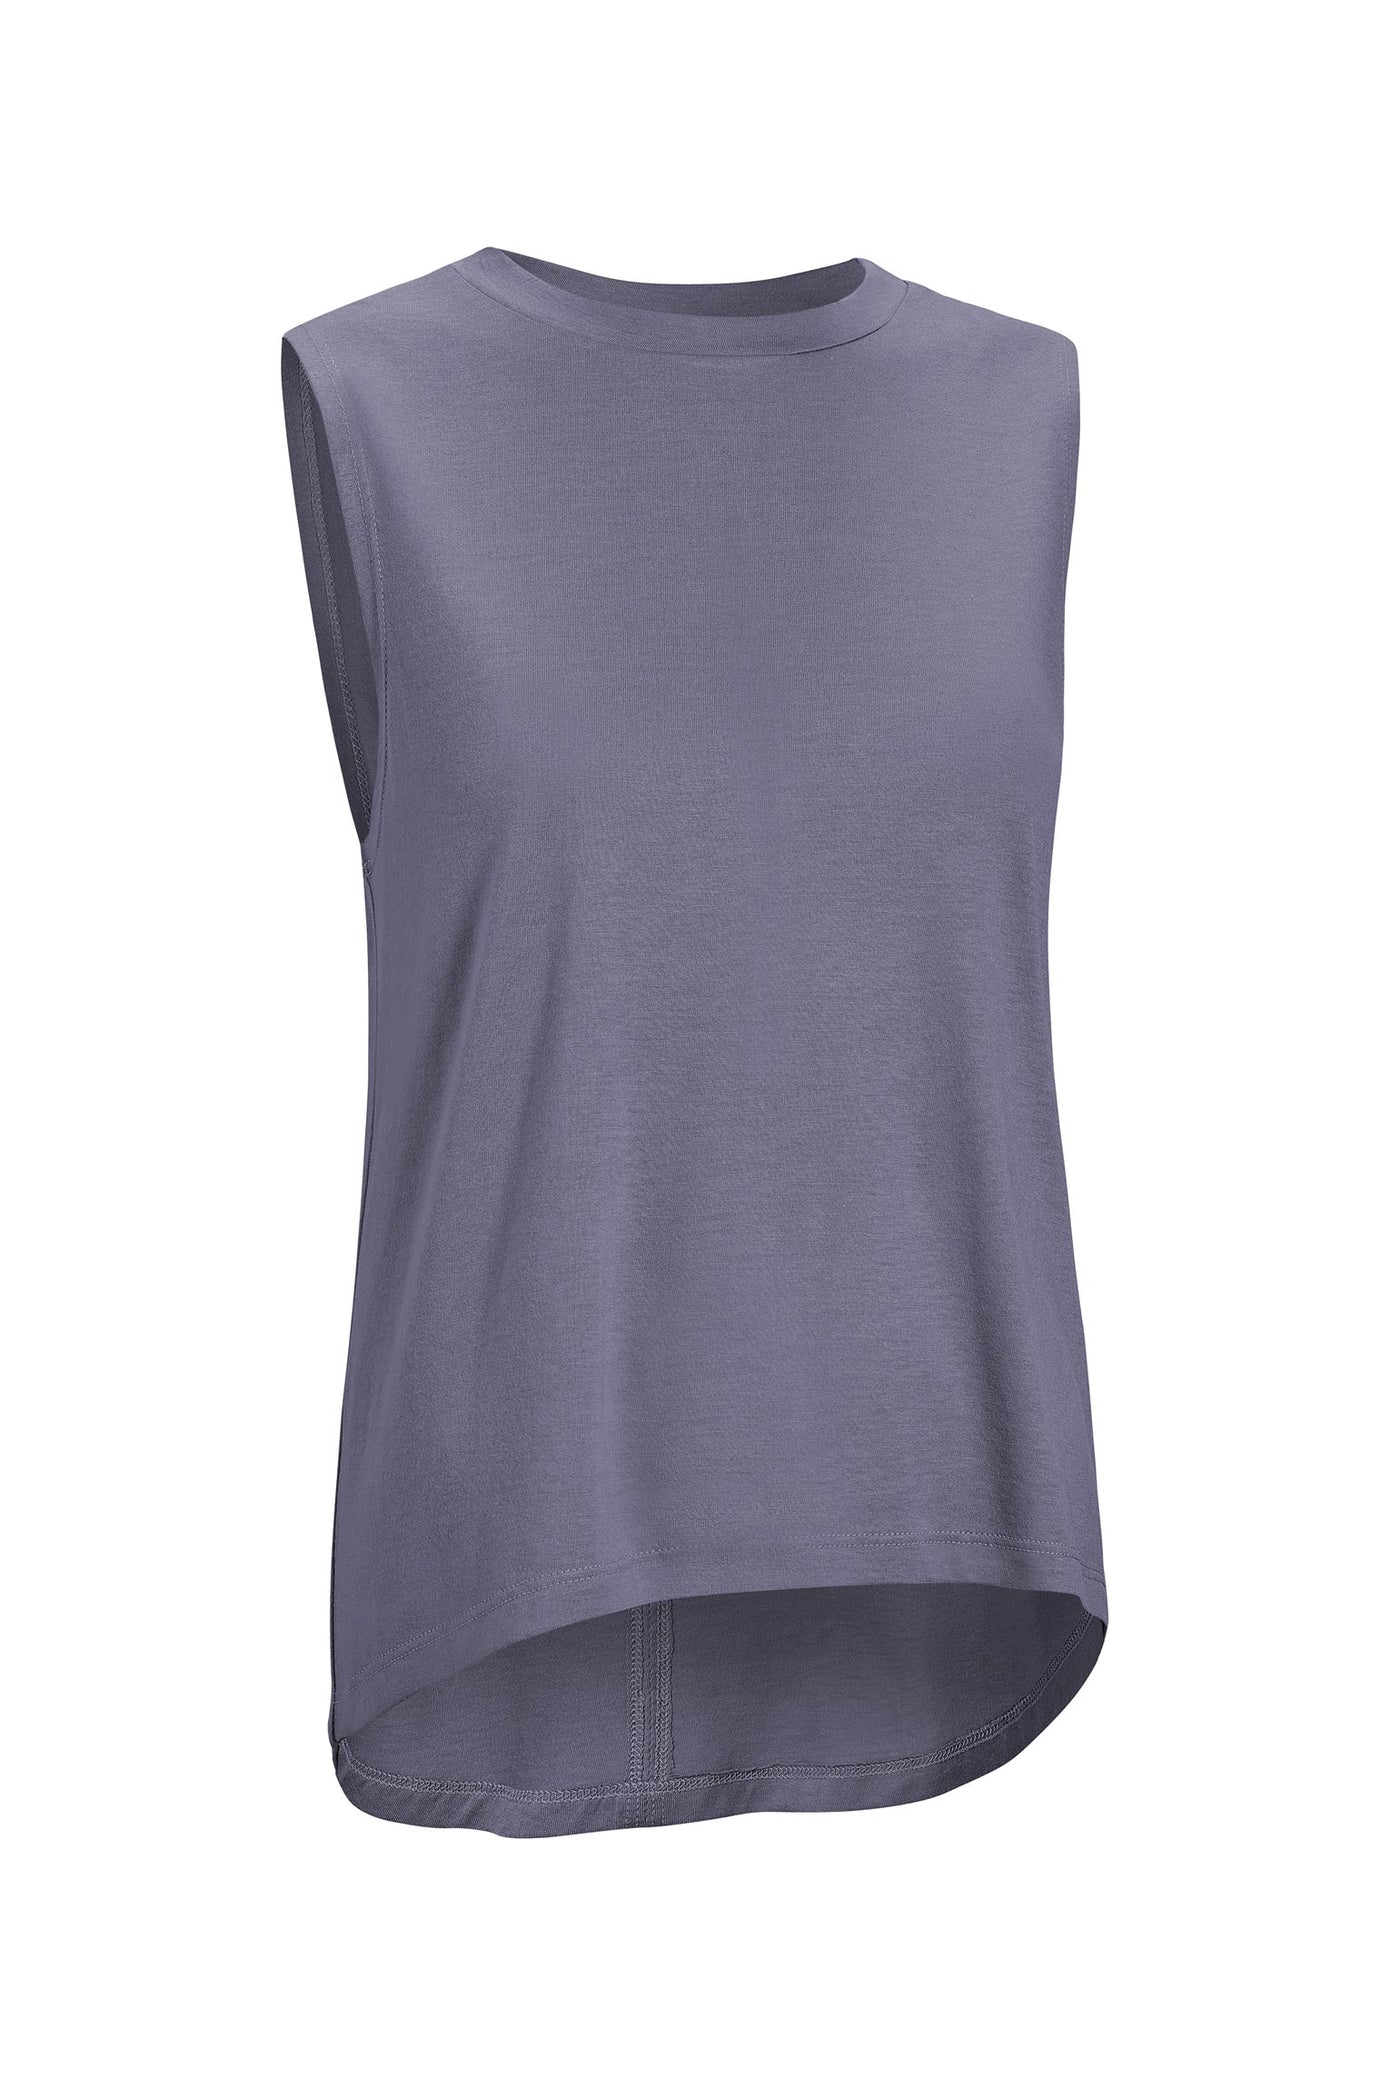 Expert Apparel Retail Women's Hemp Organic Cotton Slit Back Hi-Lo Muscle Tank in Graphite#color_graphite